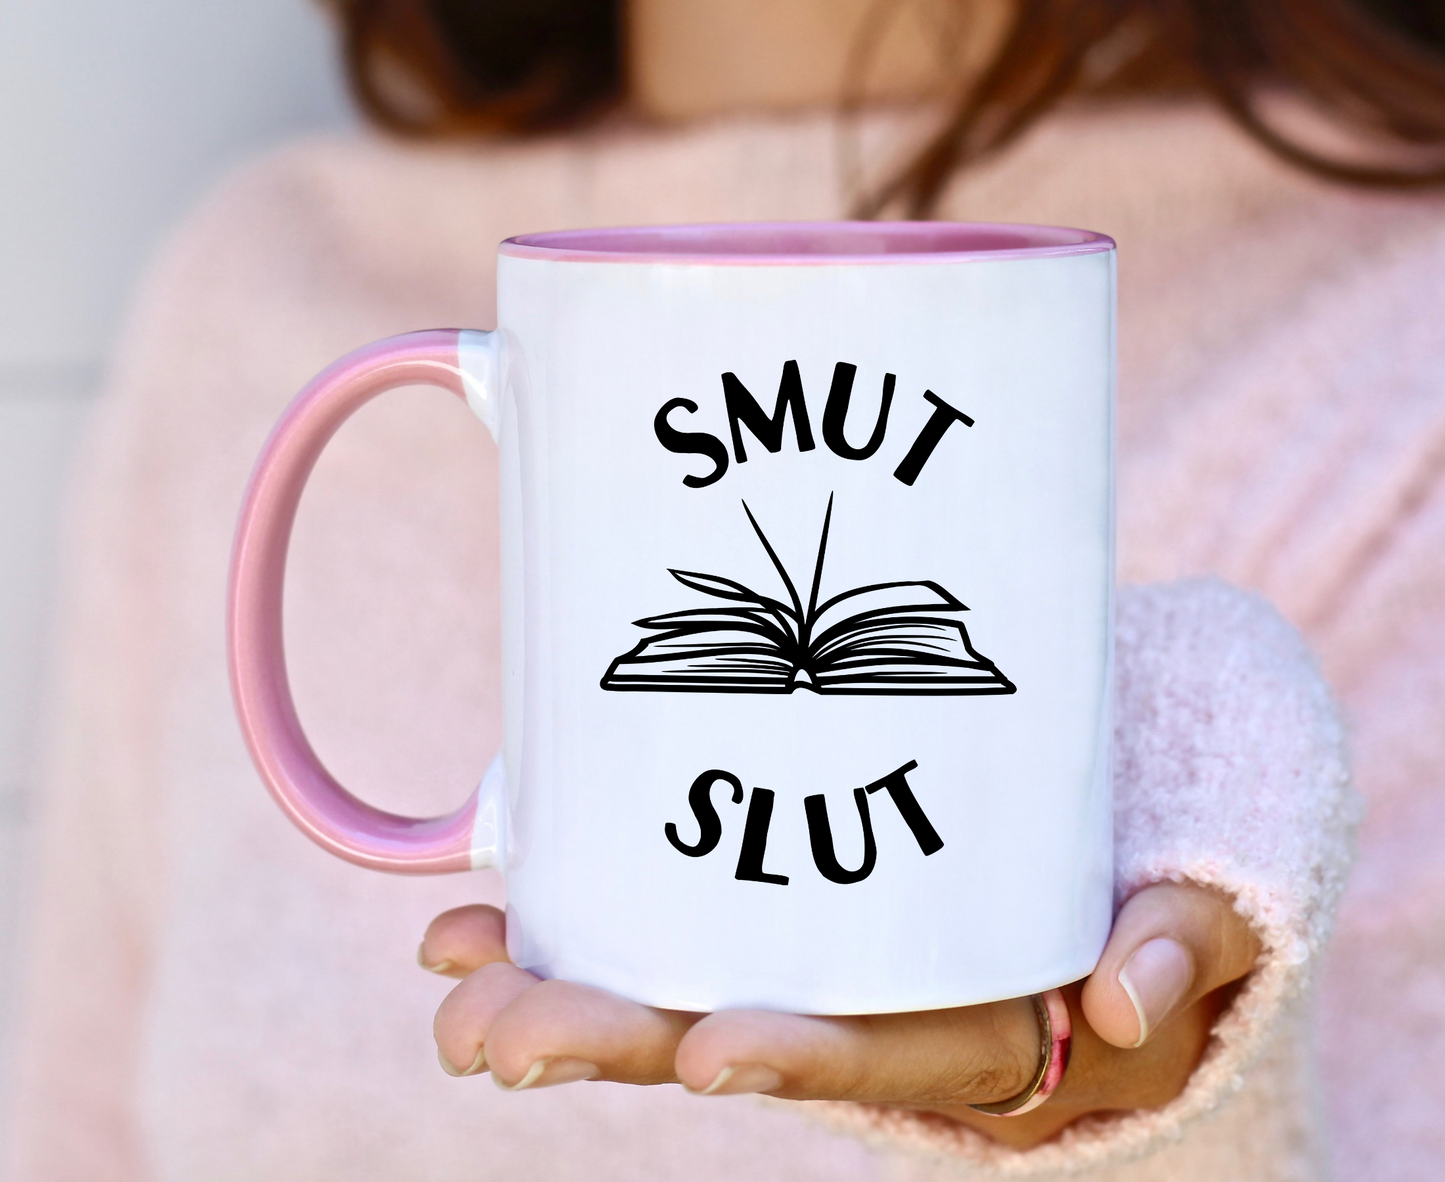 Smut Slut Accent Handle Mug Book Mug